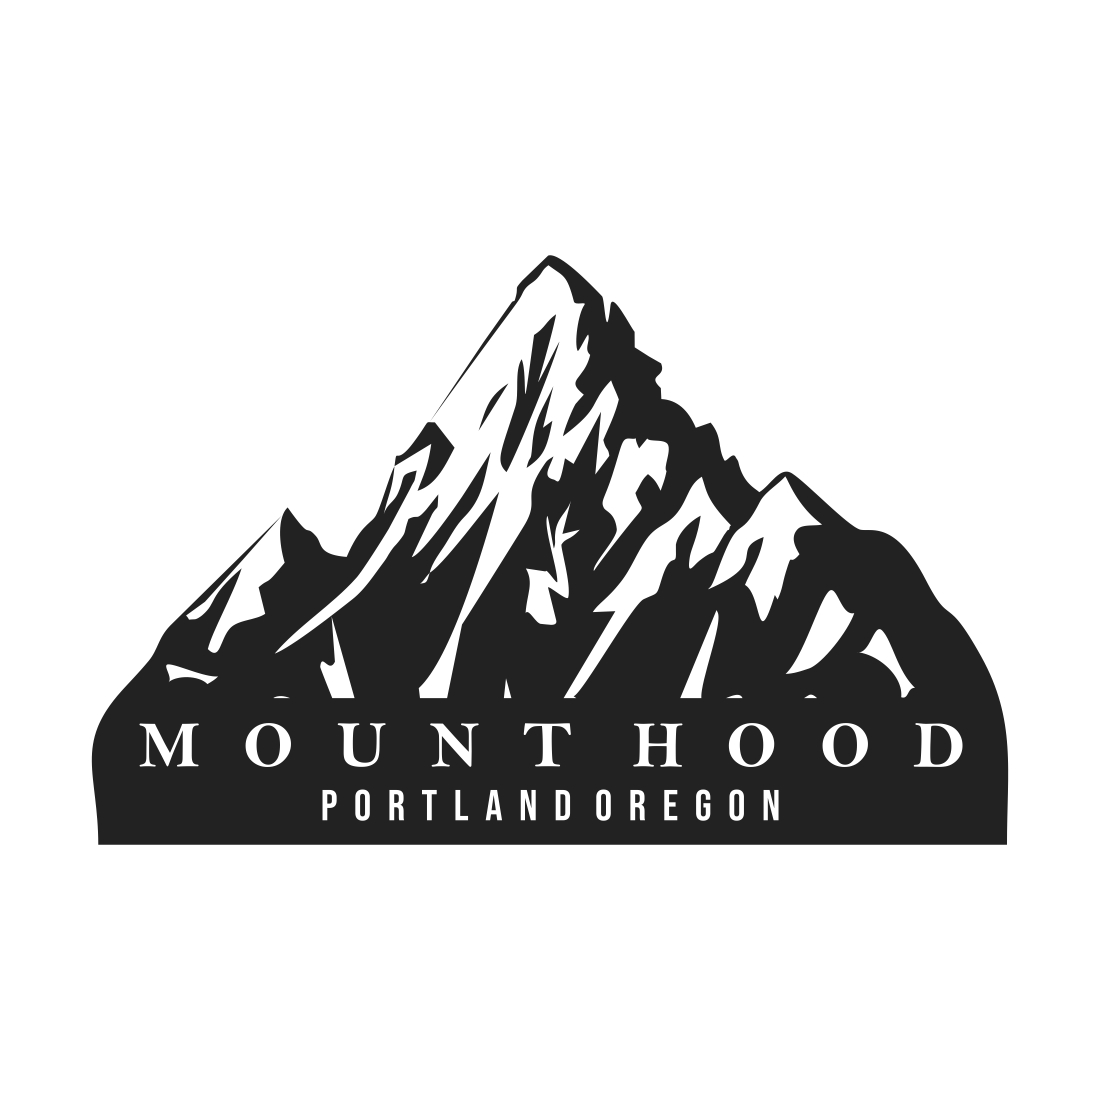 Silhouette of Mount Hood Portland Oregon Mountain logo design cover image.